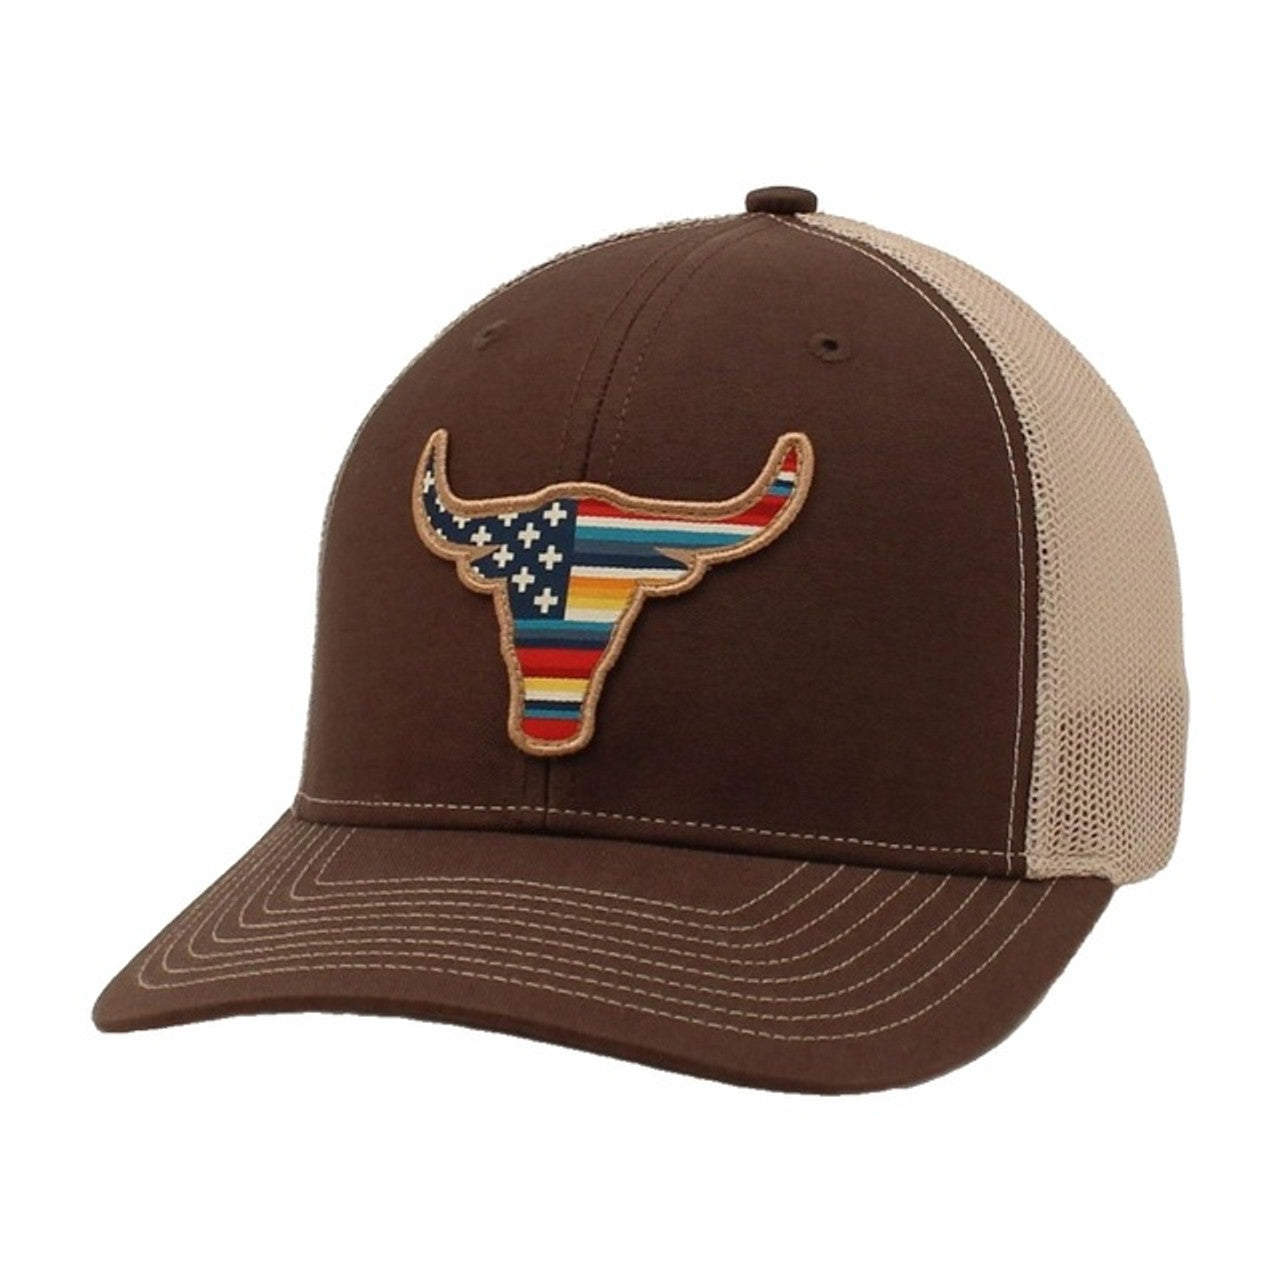 Serape Bull Snapback Patch Cap Hats - A300046002